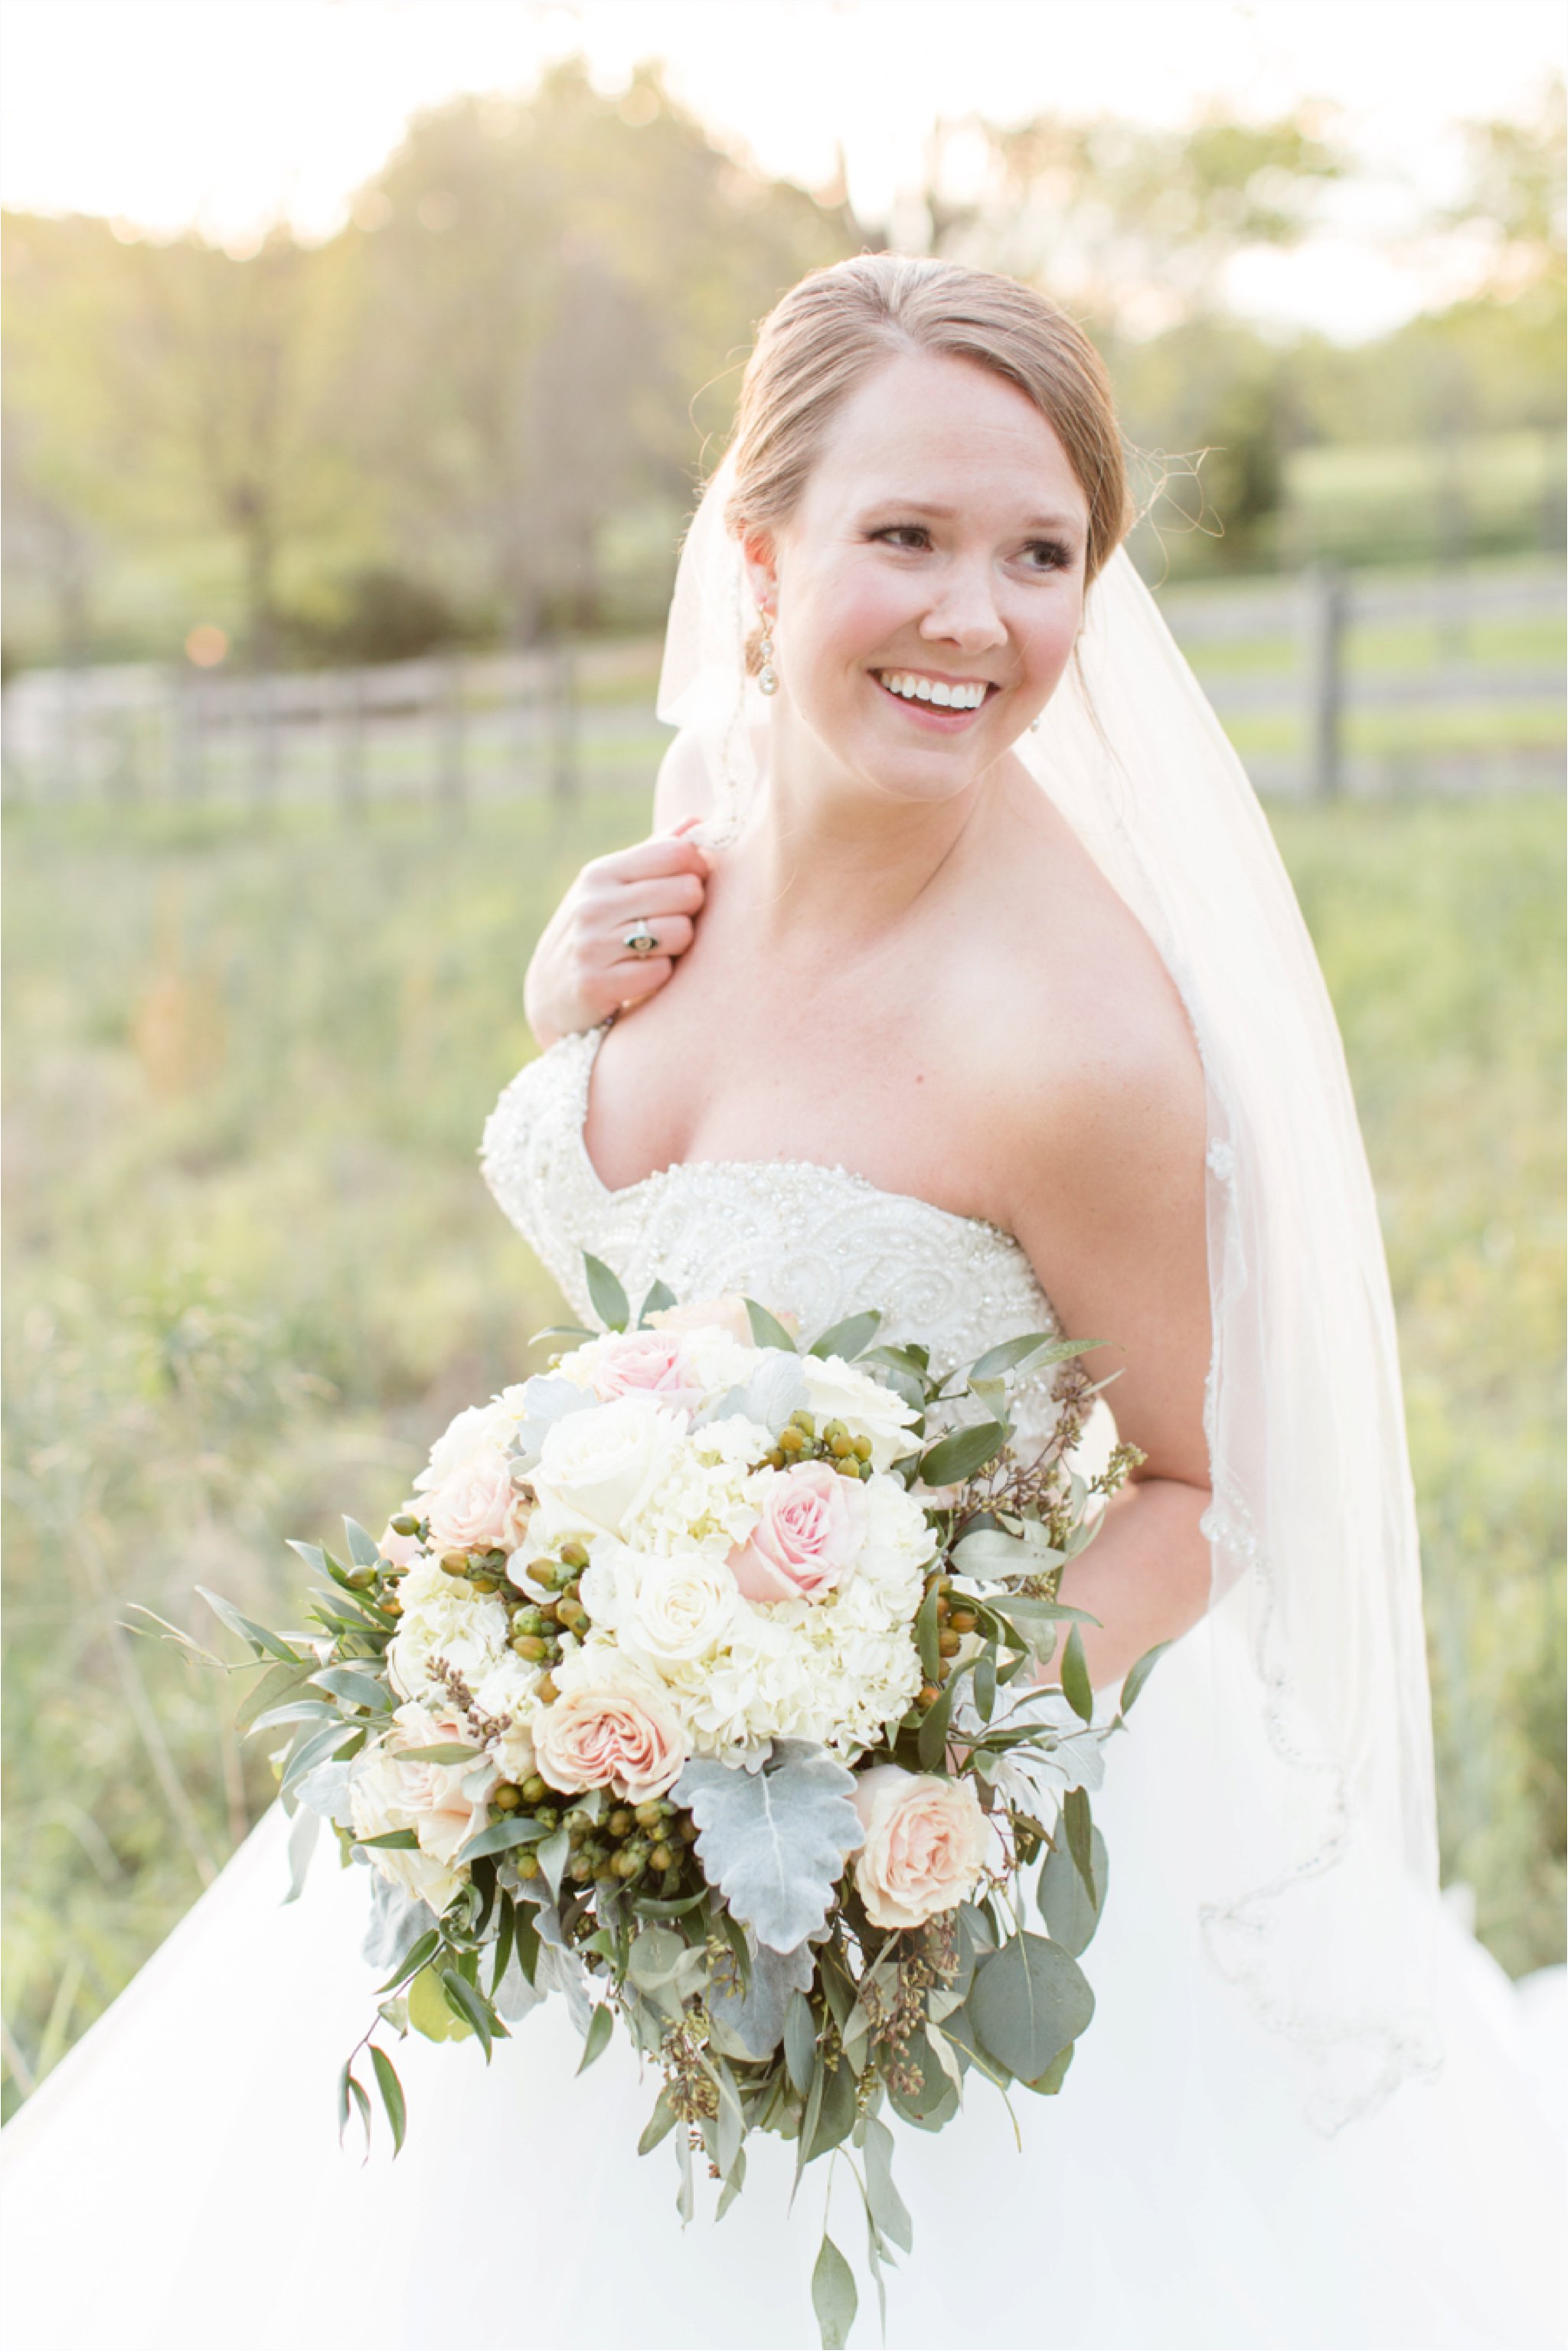 Bridal Portraits by Greenville, SC Wedding Photographer Christa Rene Photography